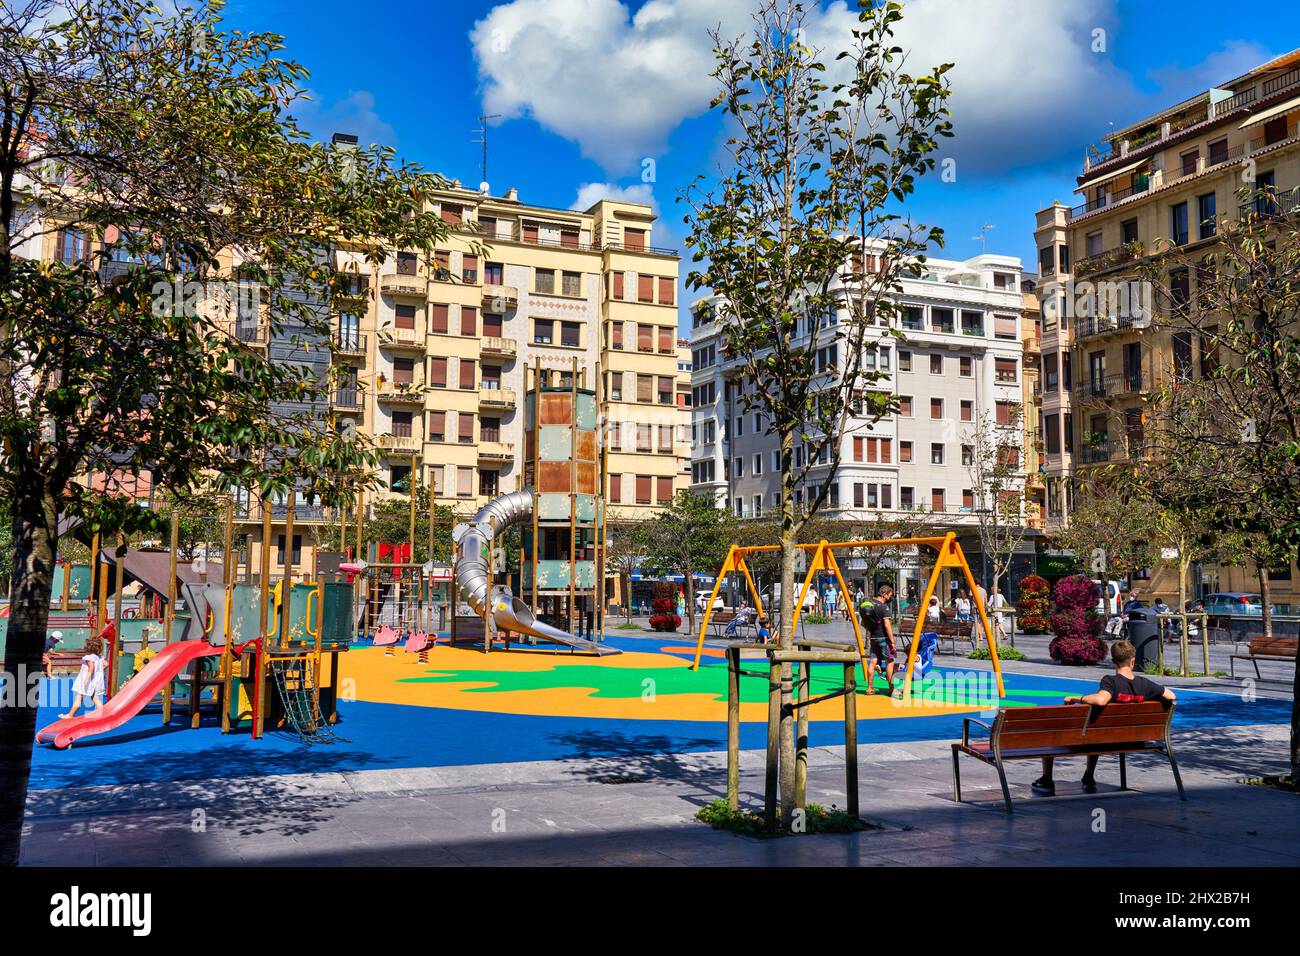 Children playing in a playground, Plaza Cataluña, Barrio de Gros, one of the most atmospheric neighborhoods in the city, Donostia, San Sebastián, Stock Photo